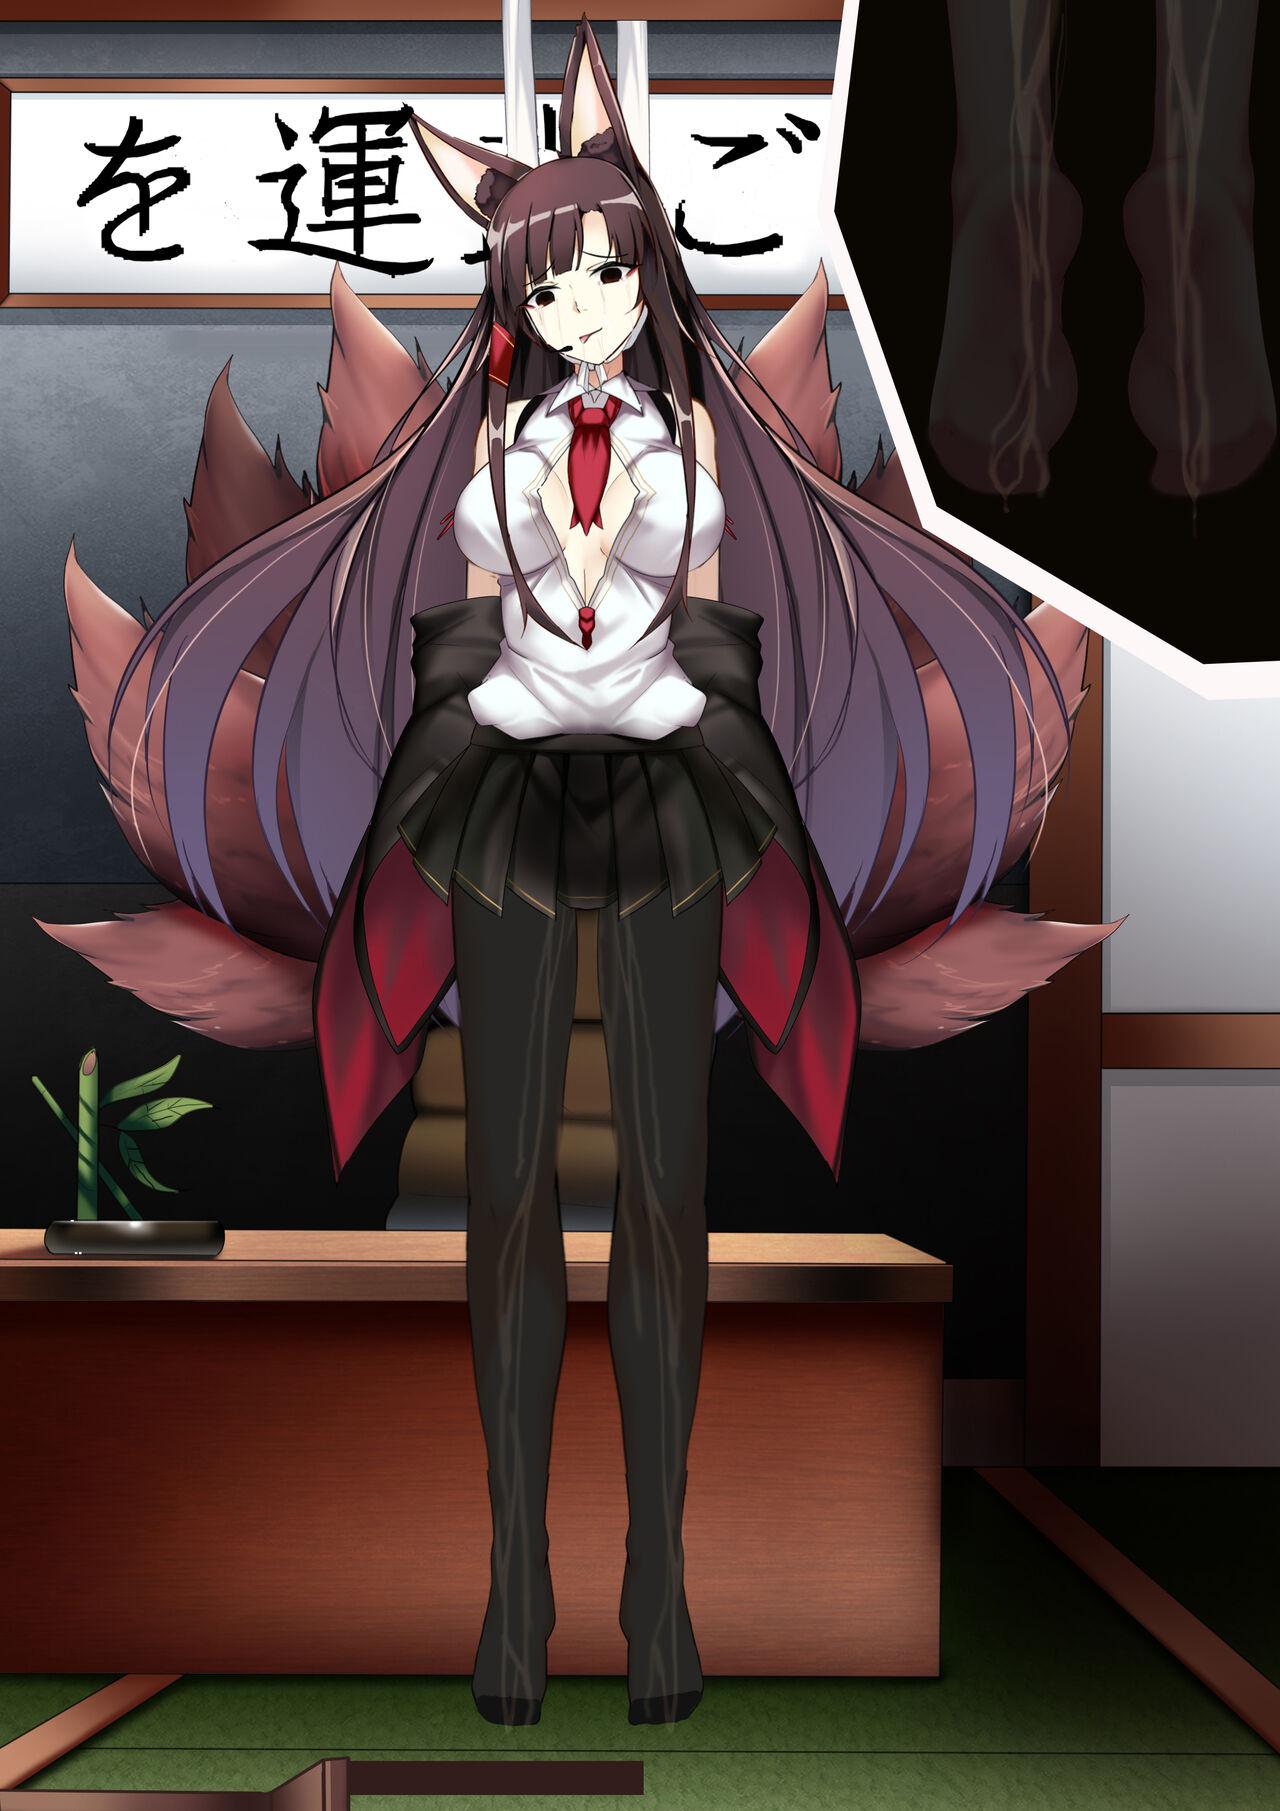 Akagi hanged herself in her office 48